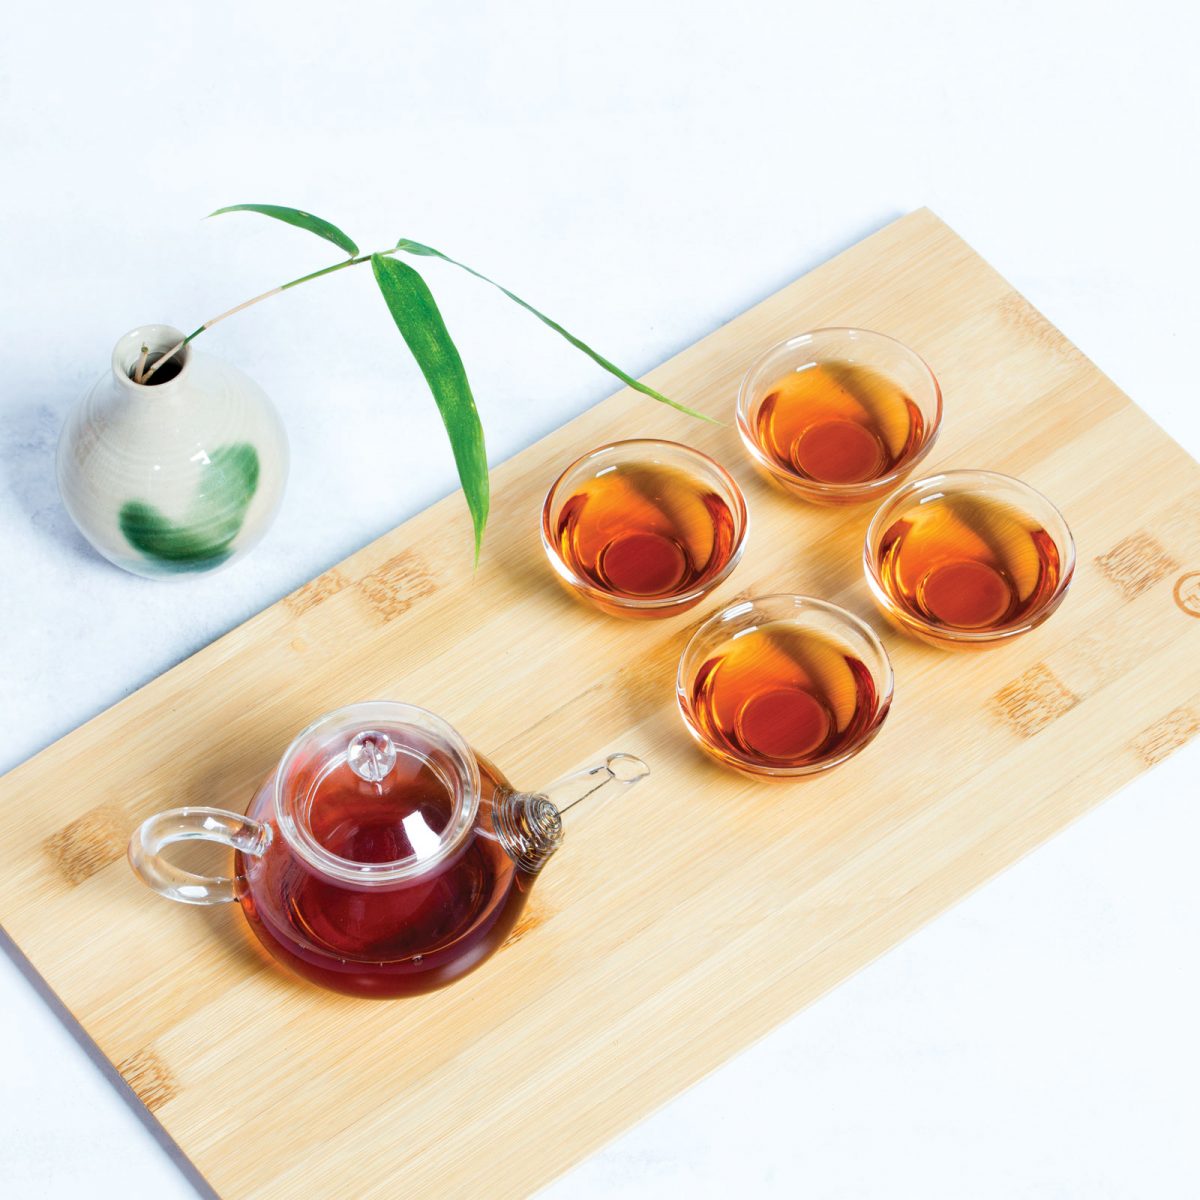 Standard glass tea sets